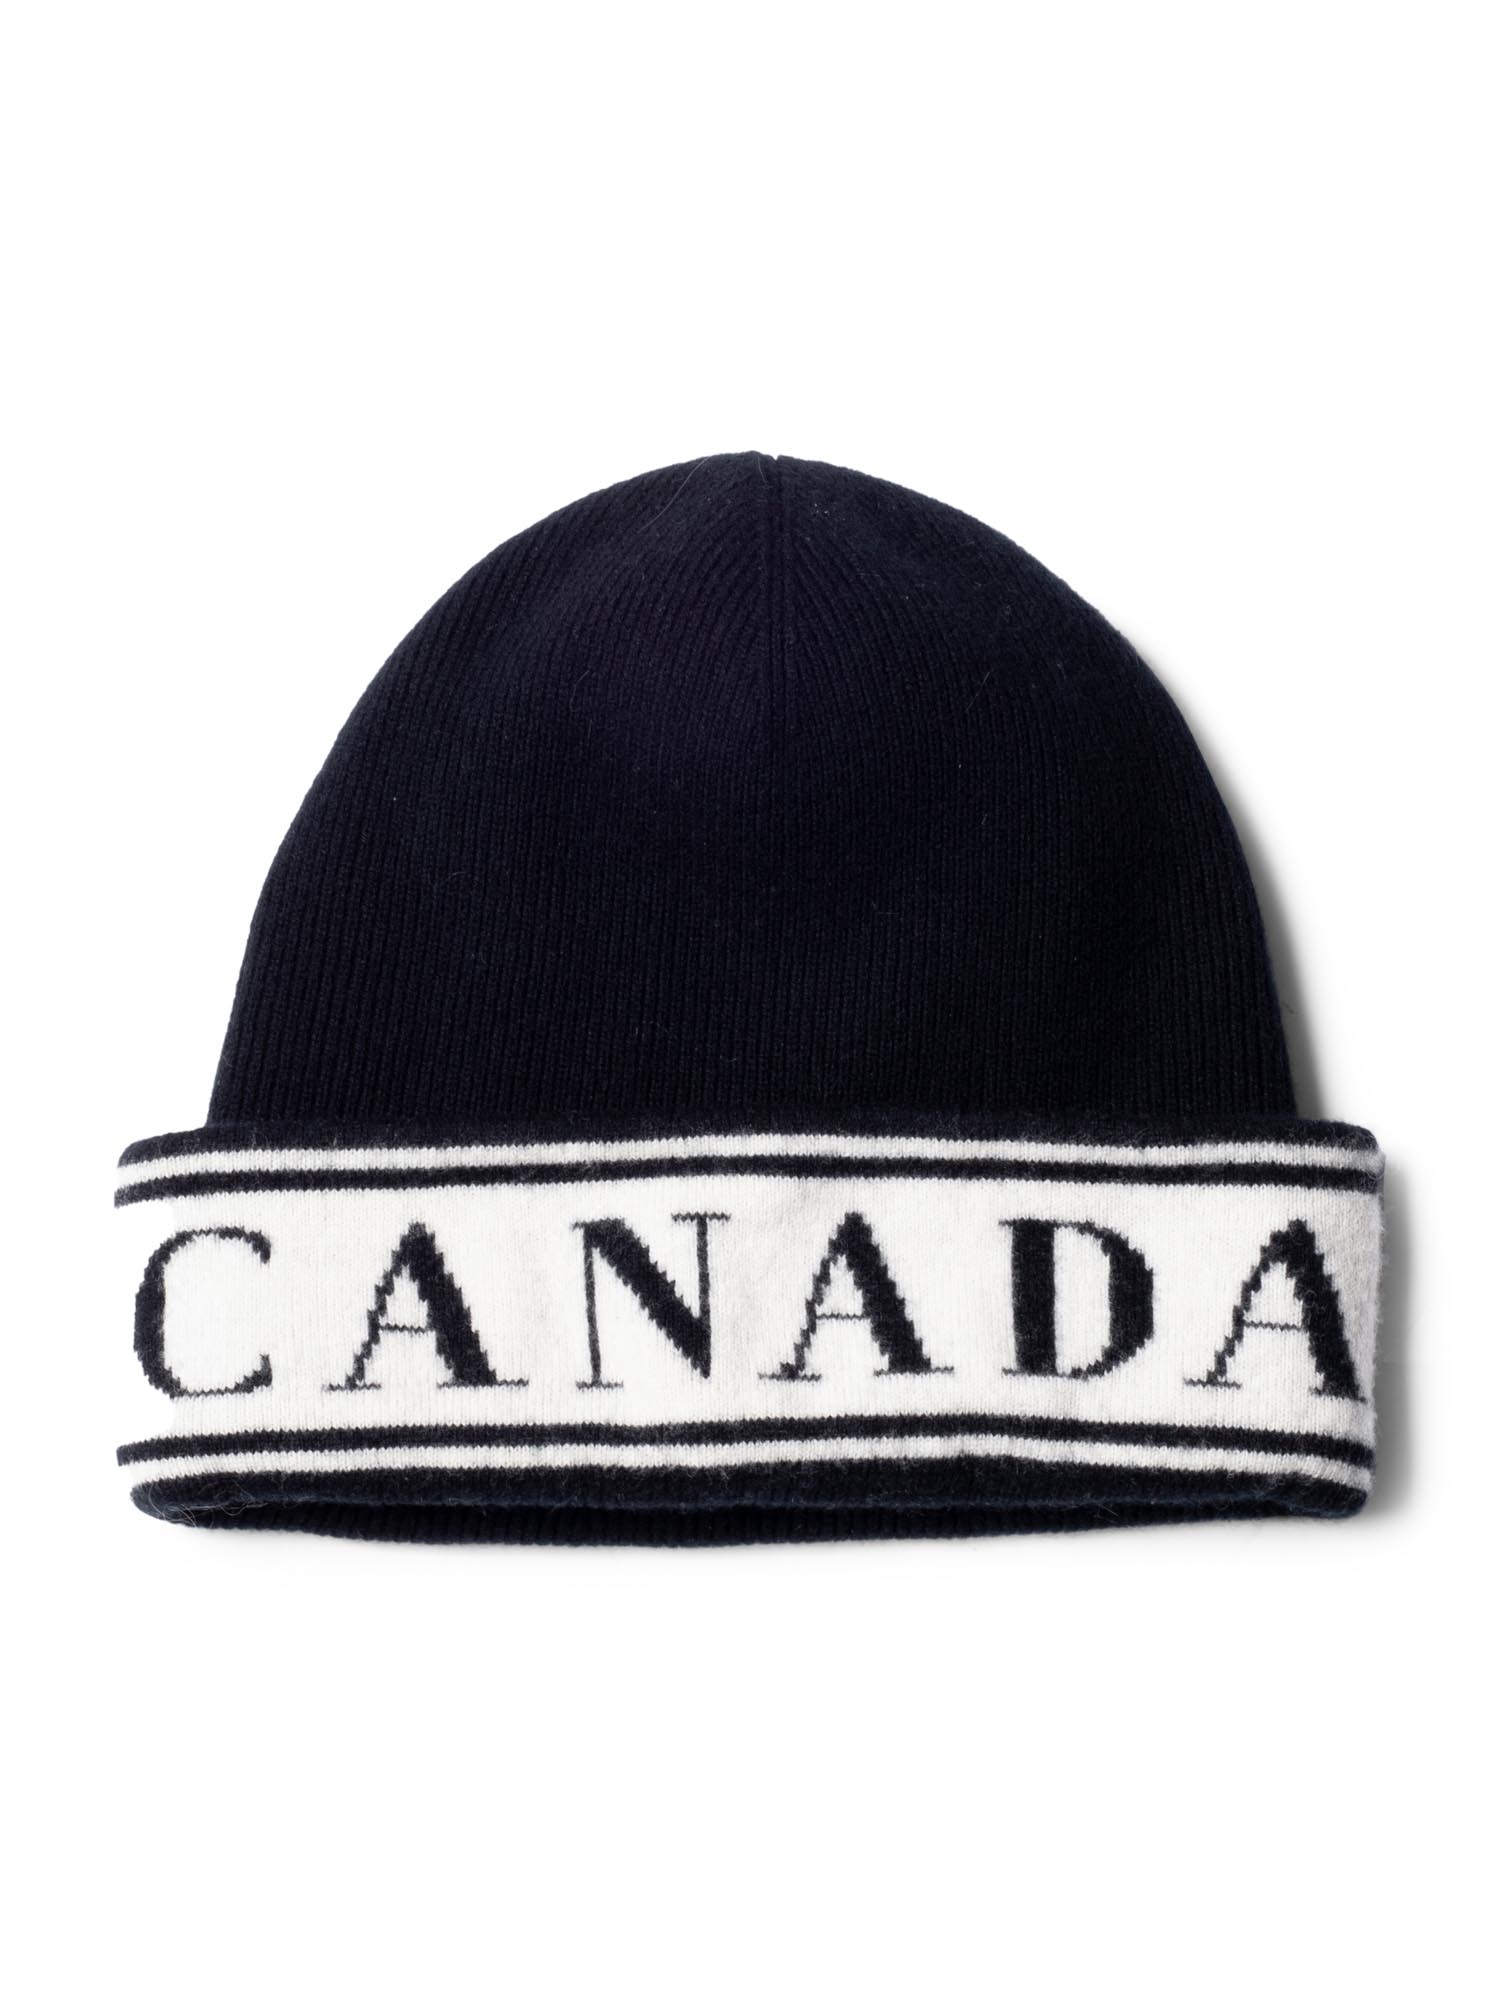 Canada Goose Logo Wool Knit Beanie Hat Black White-designer resale